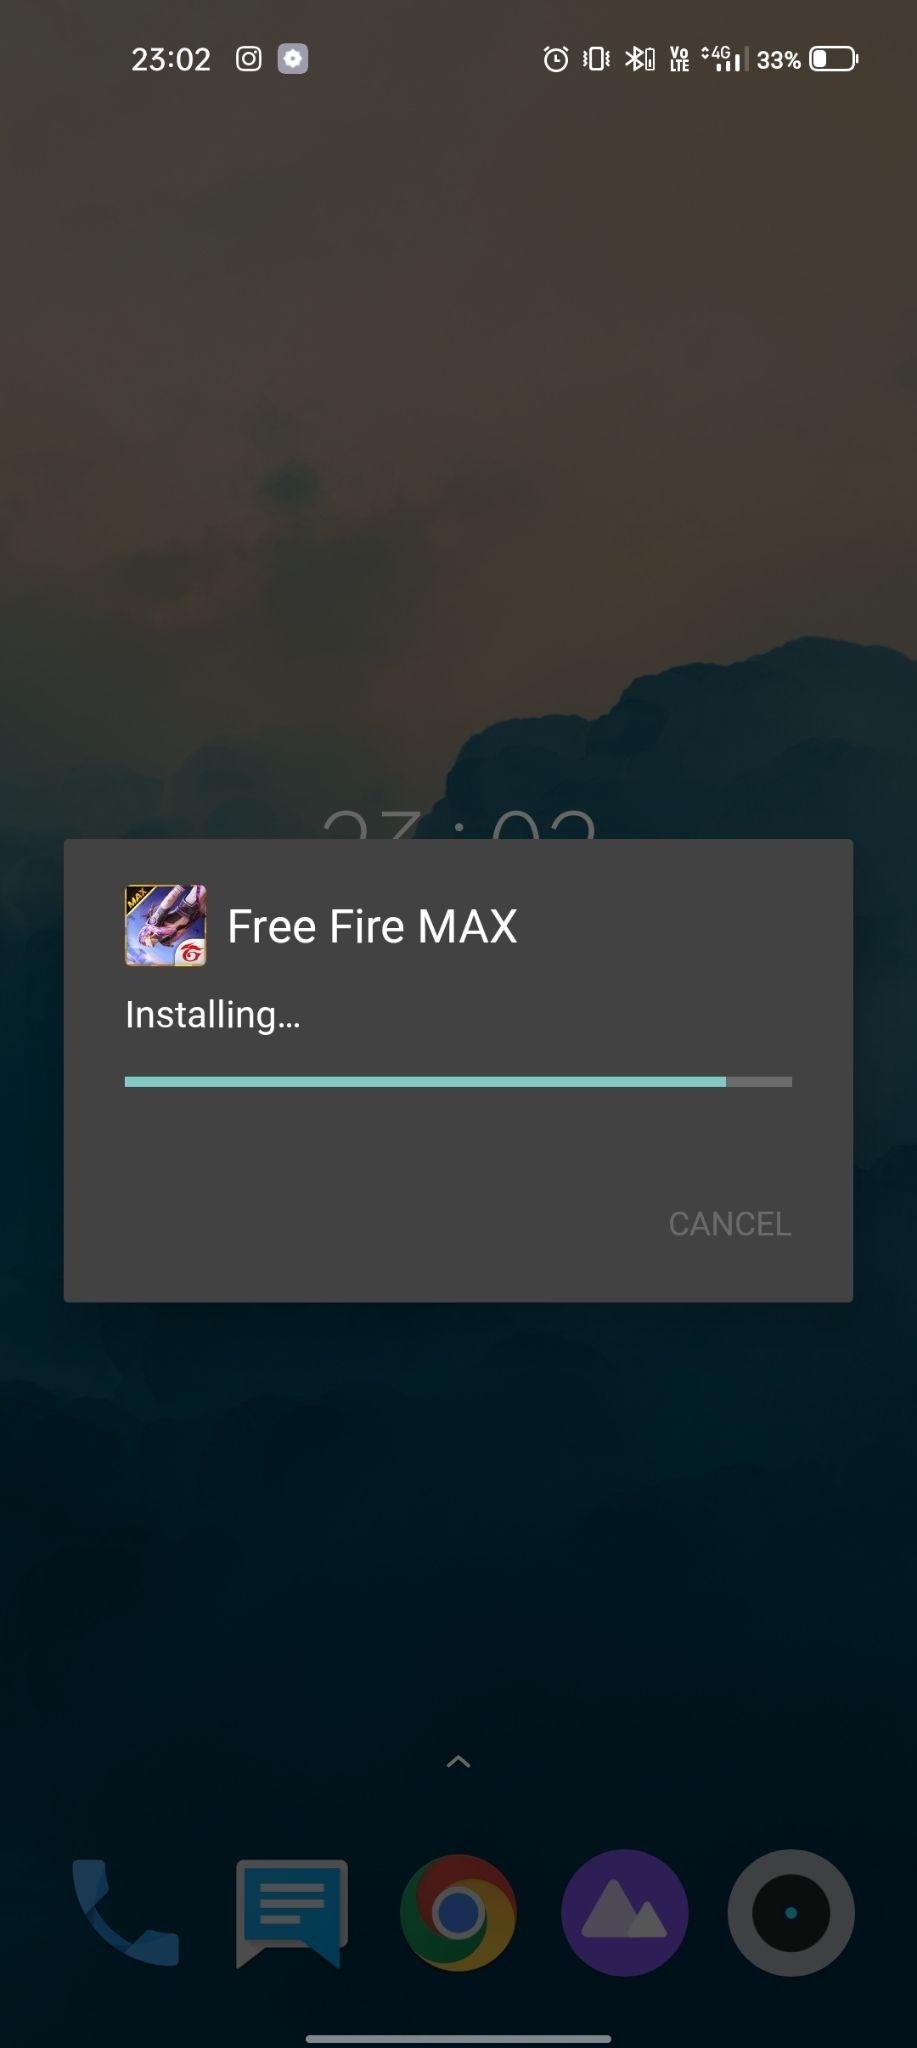 free fire max apk installing